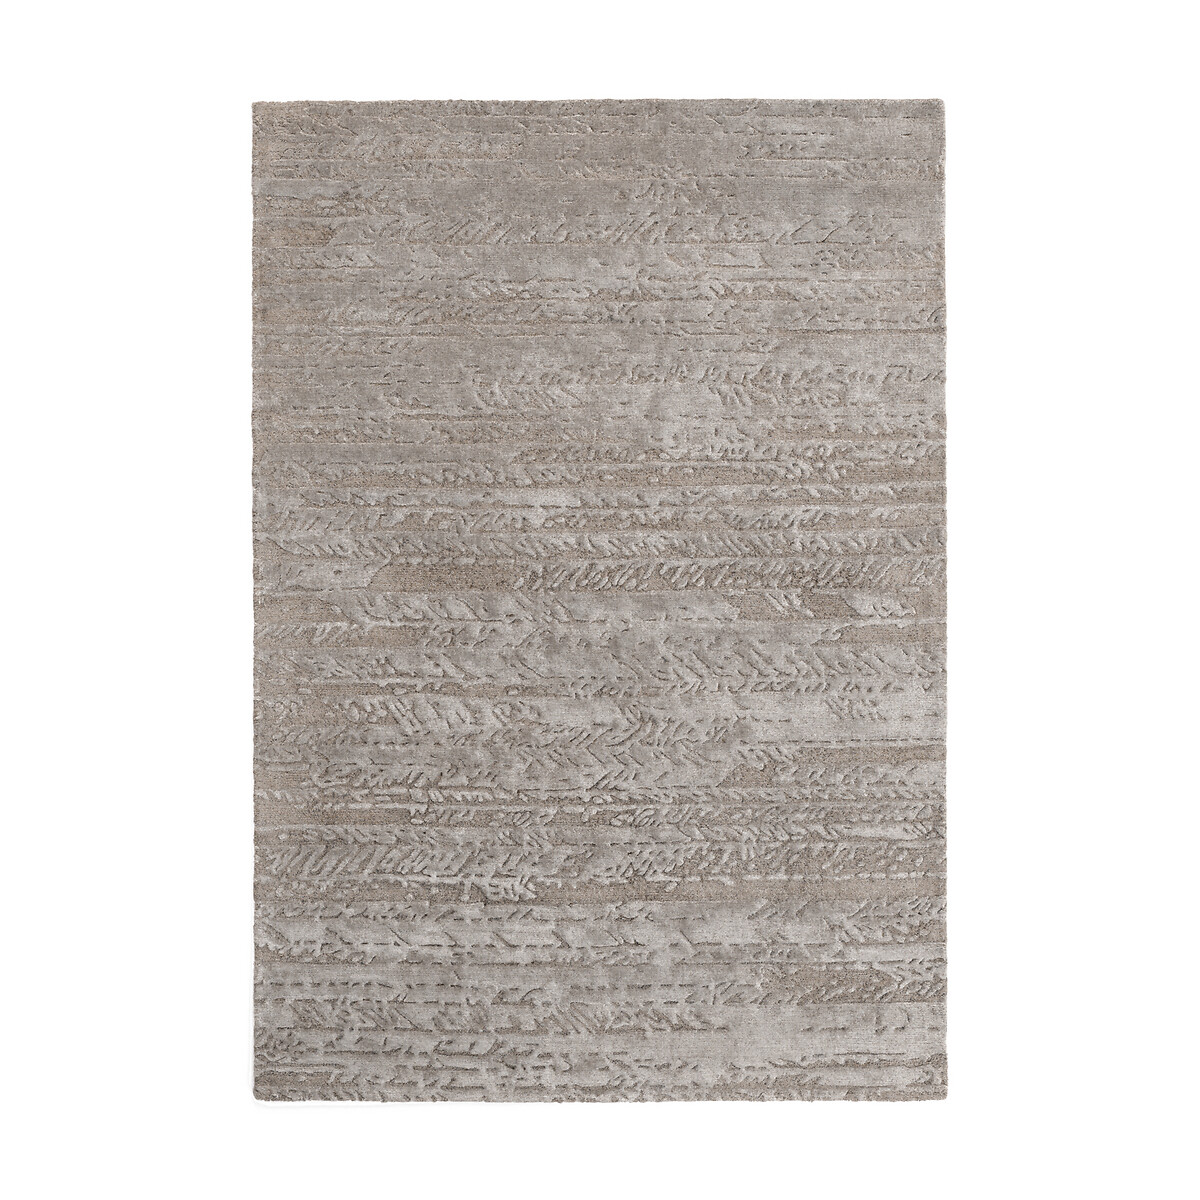 Ковер LaRedoute Из вискозной ткани меланж Tsipa 160 x 230 см бежевый, размер 160 x 230 см